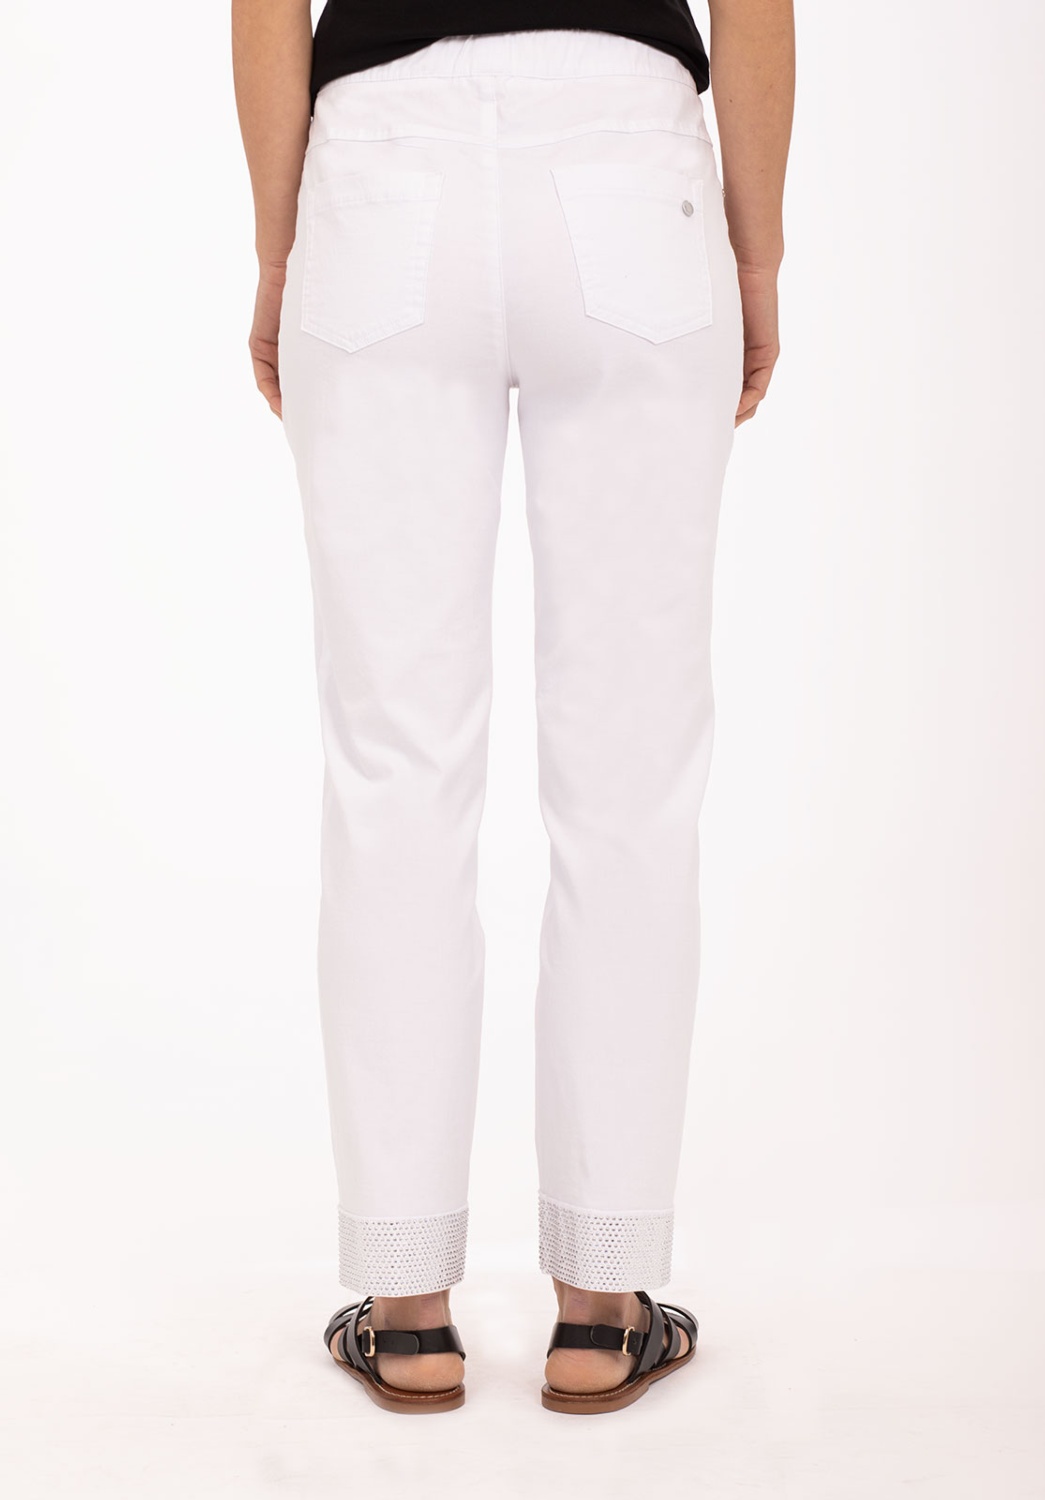 White Jeans 4